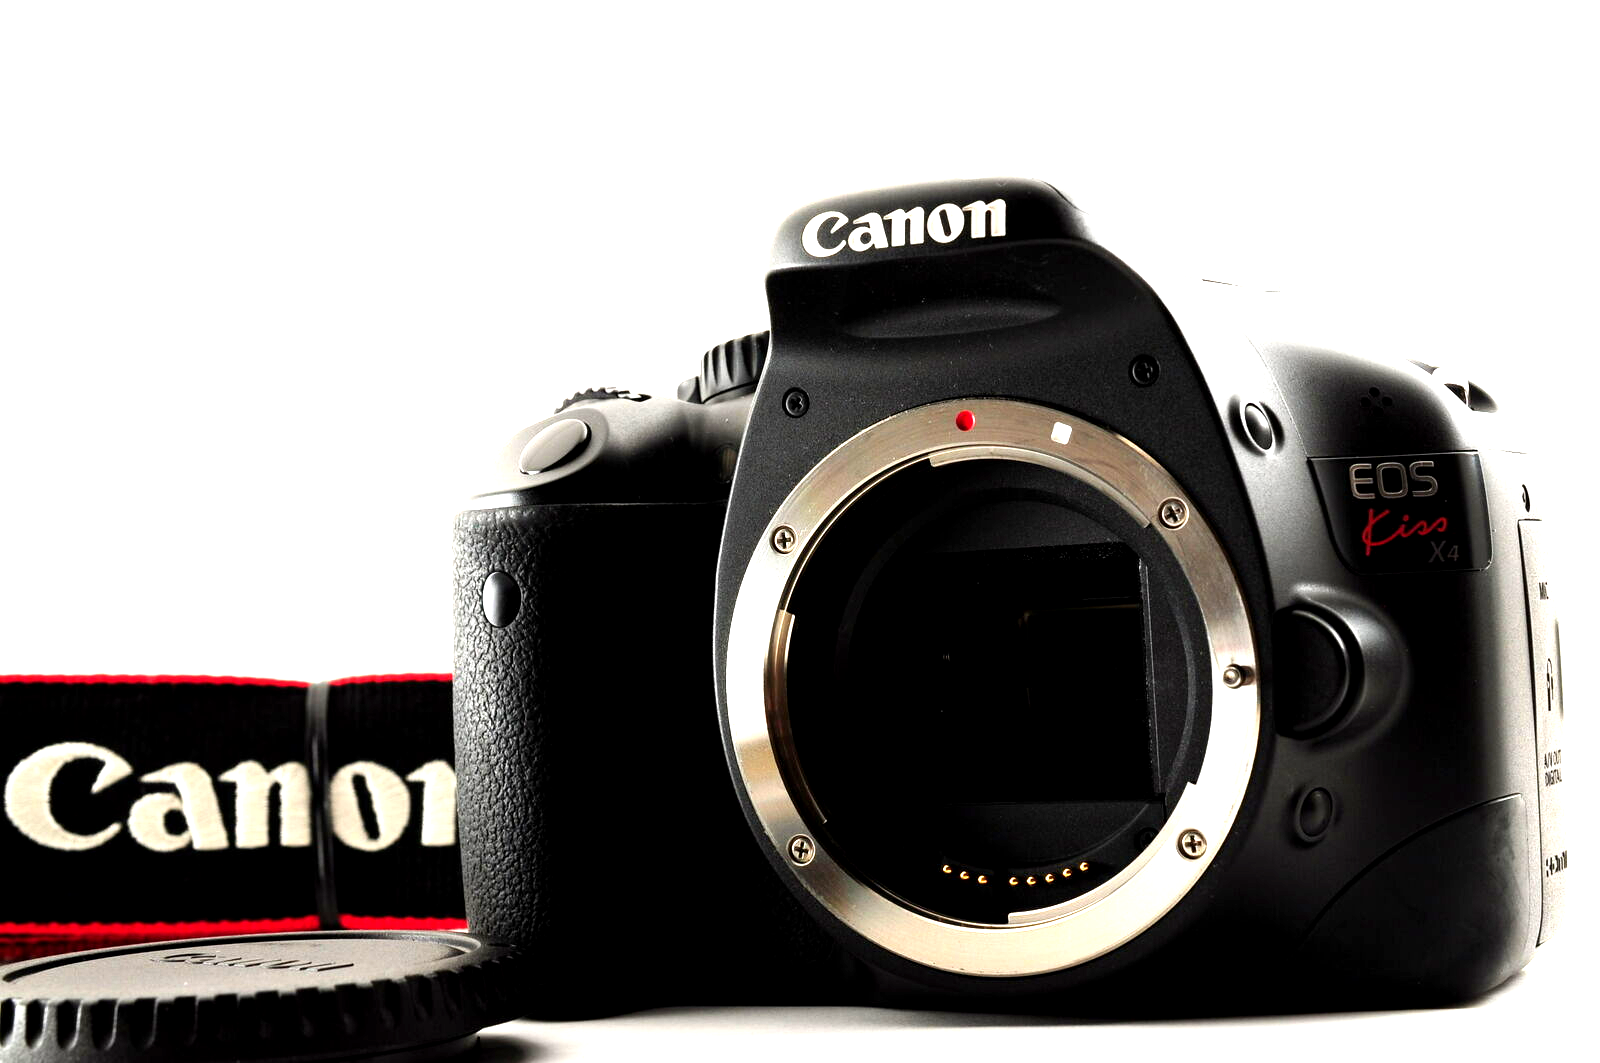 Canon EOS Kiss X4 / Rebel T2i / 550D 18.0MP Digital Camera Black Body from  Japan